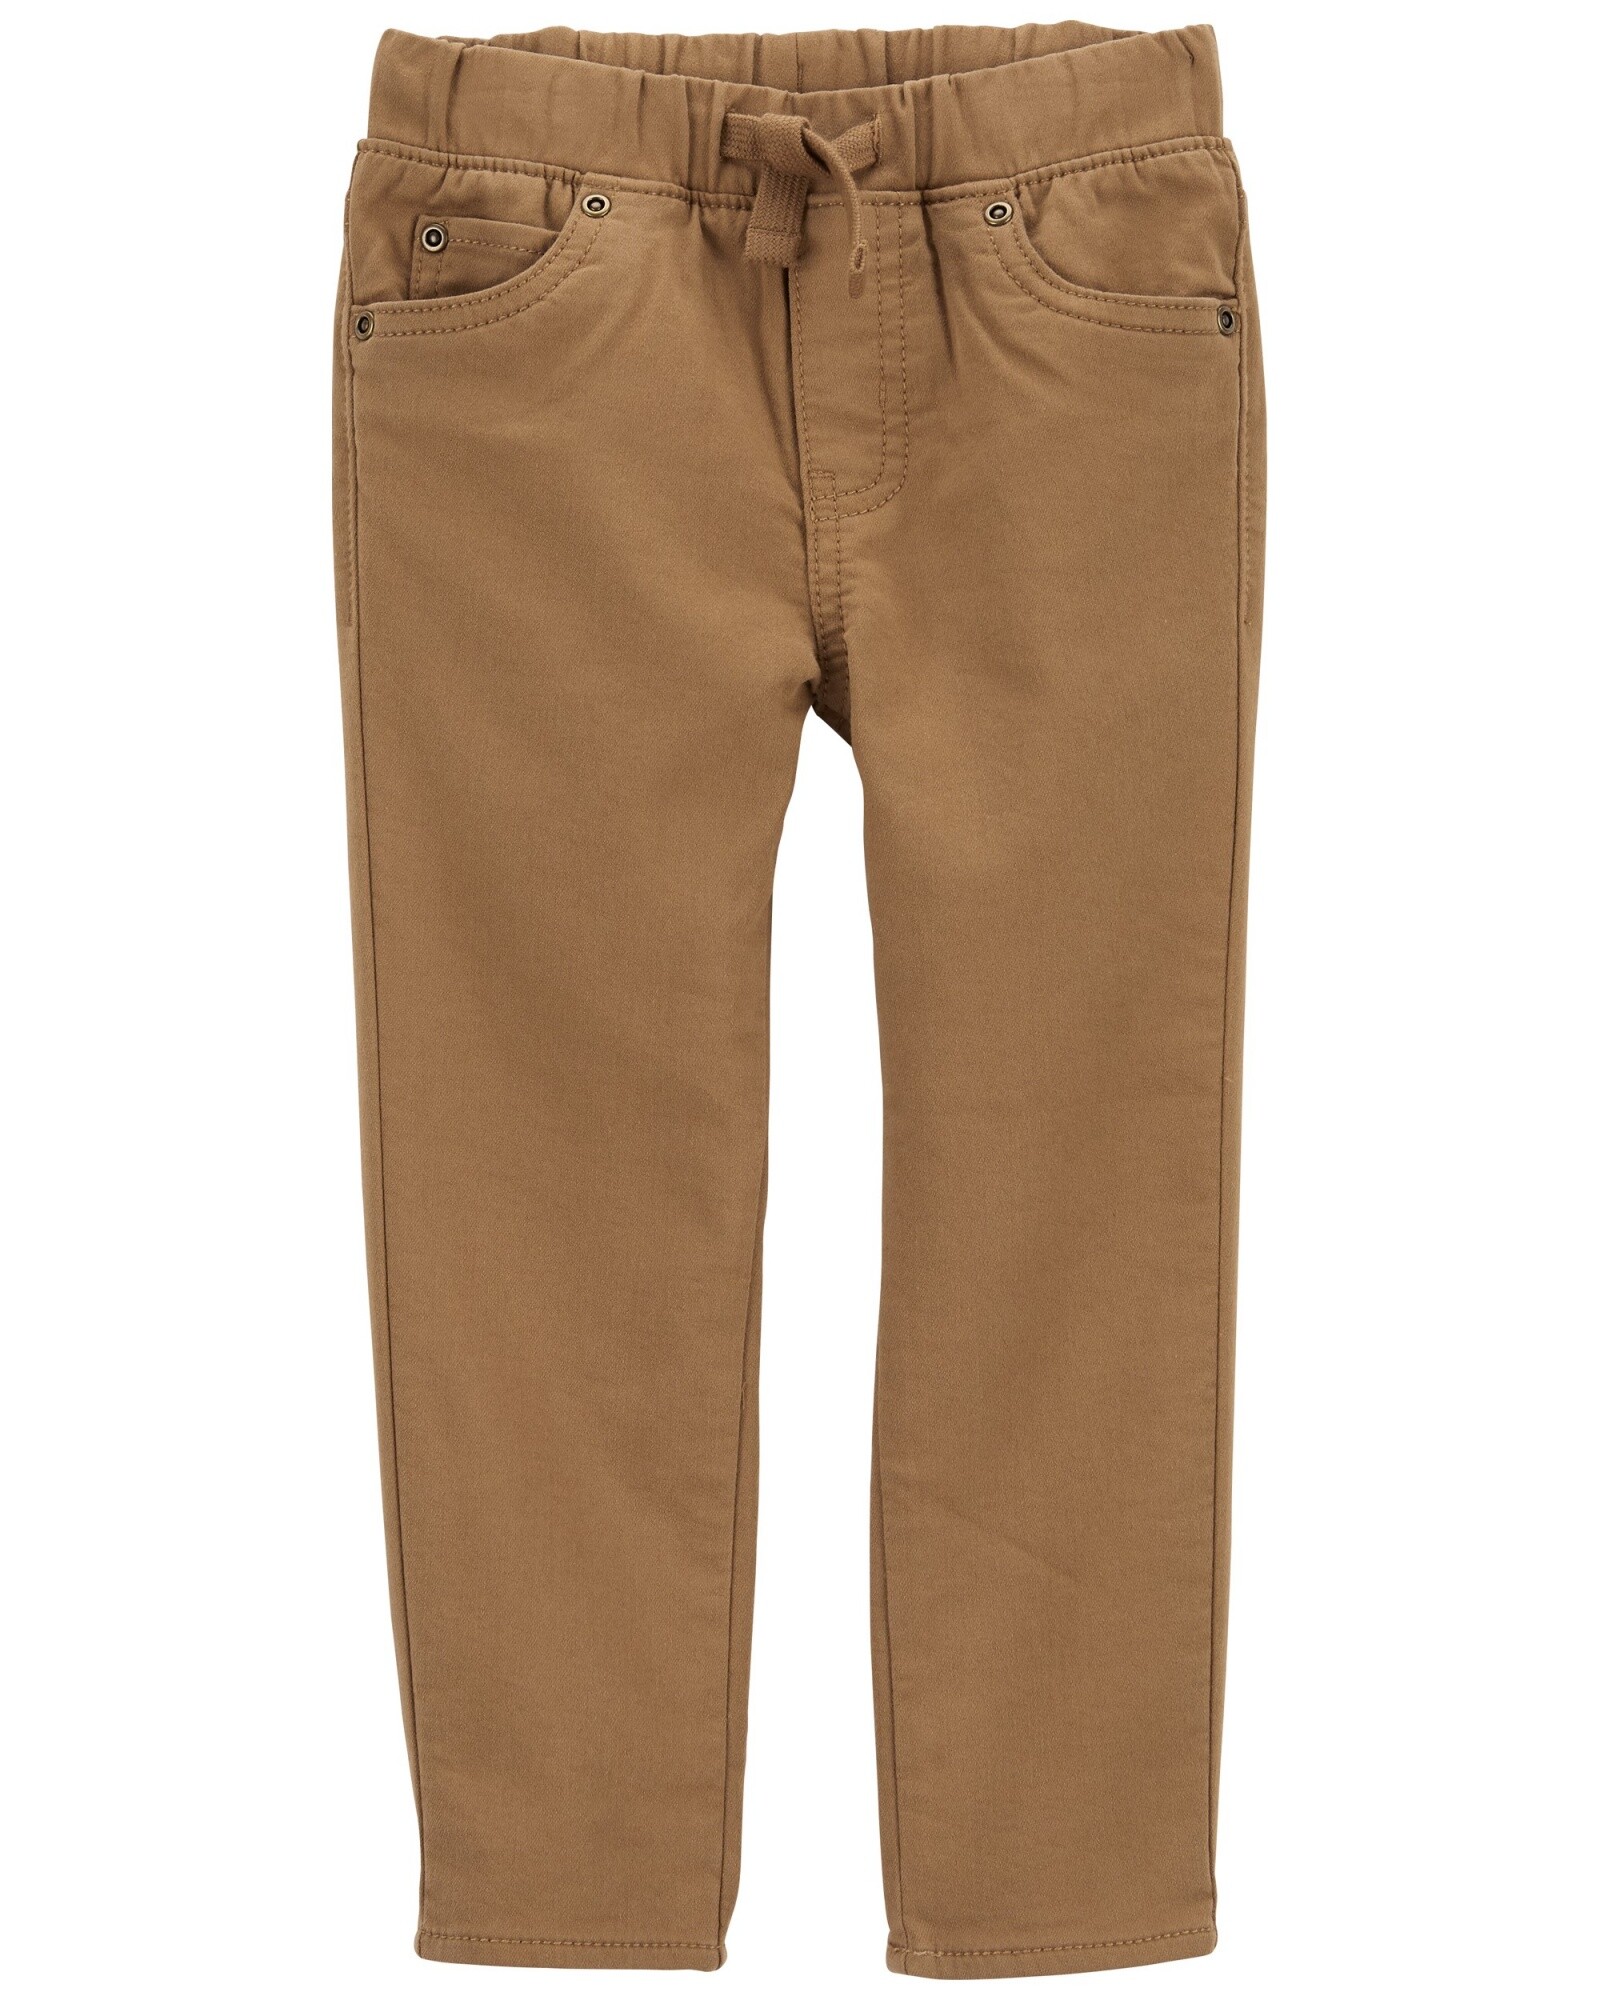 Pantalón en tejido dobby, color khaki Sin color